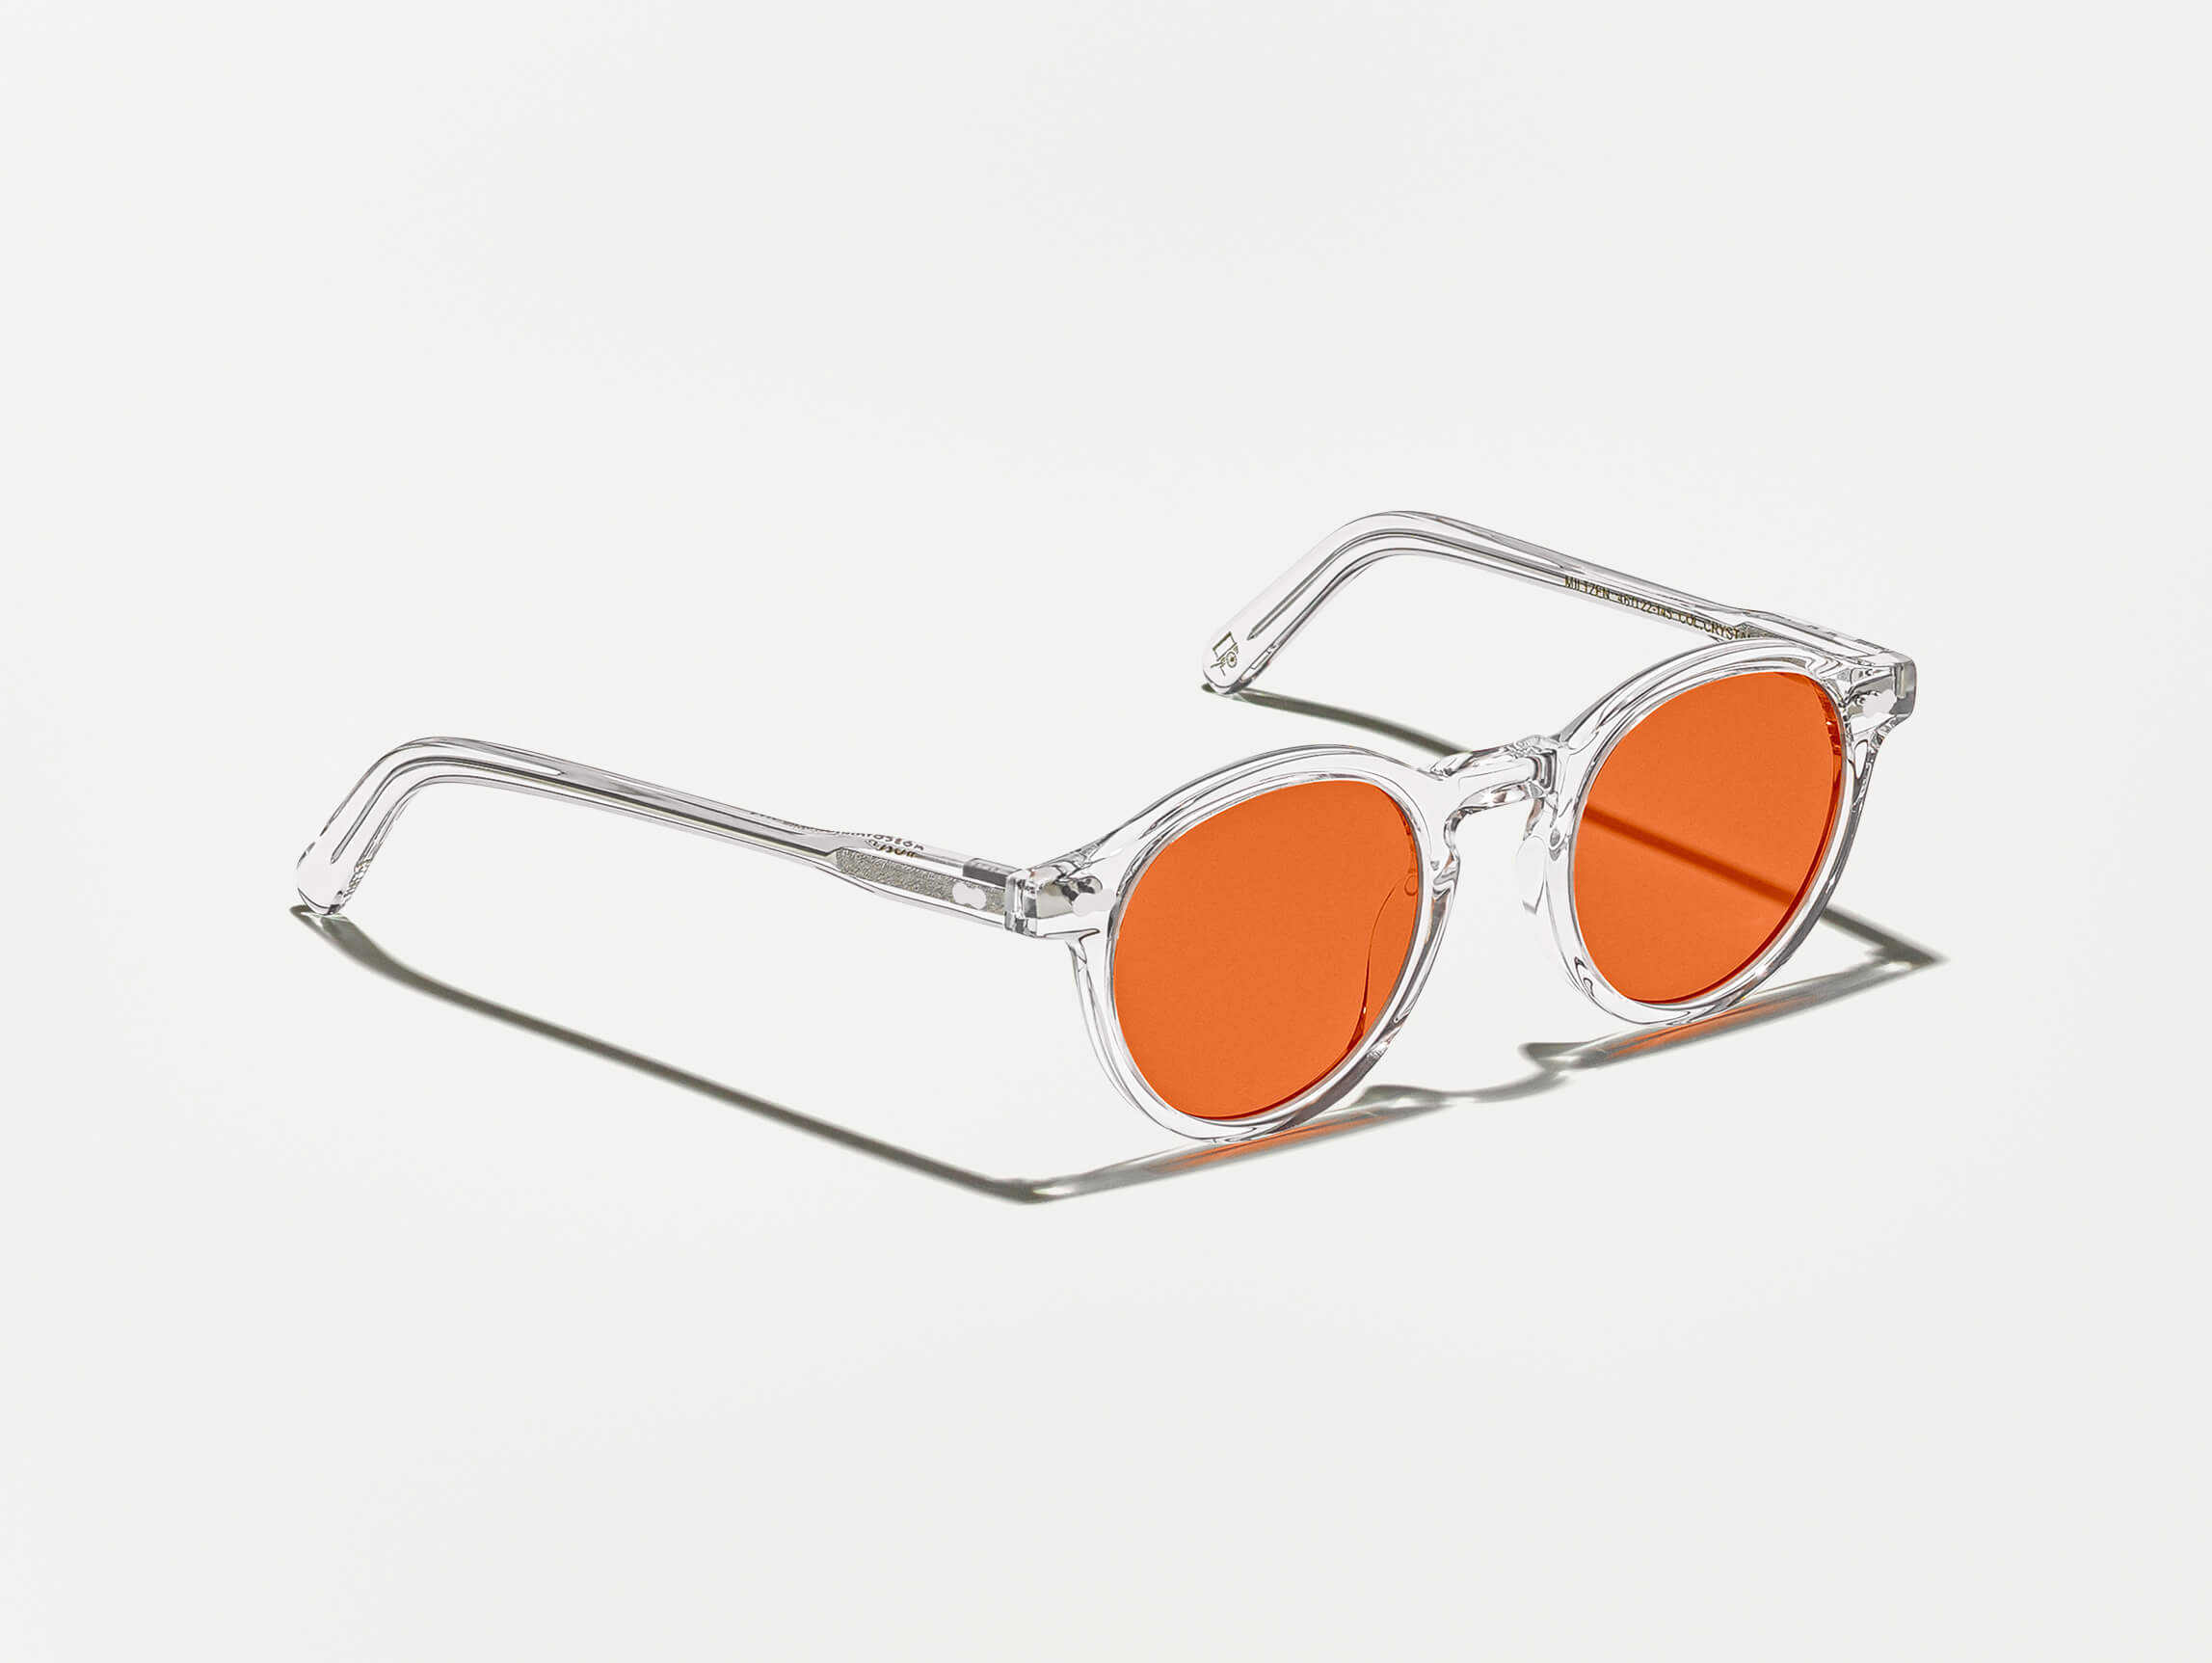 The MILTZEN Crystal with Woodstock Orange Tinted Lenses